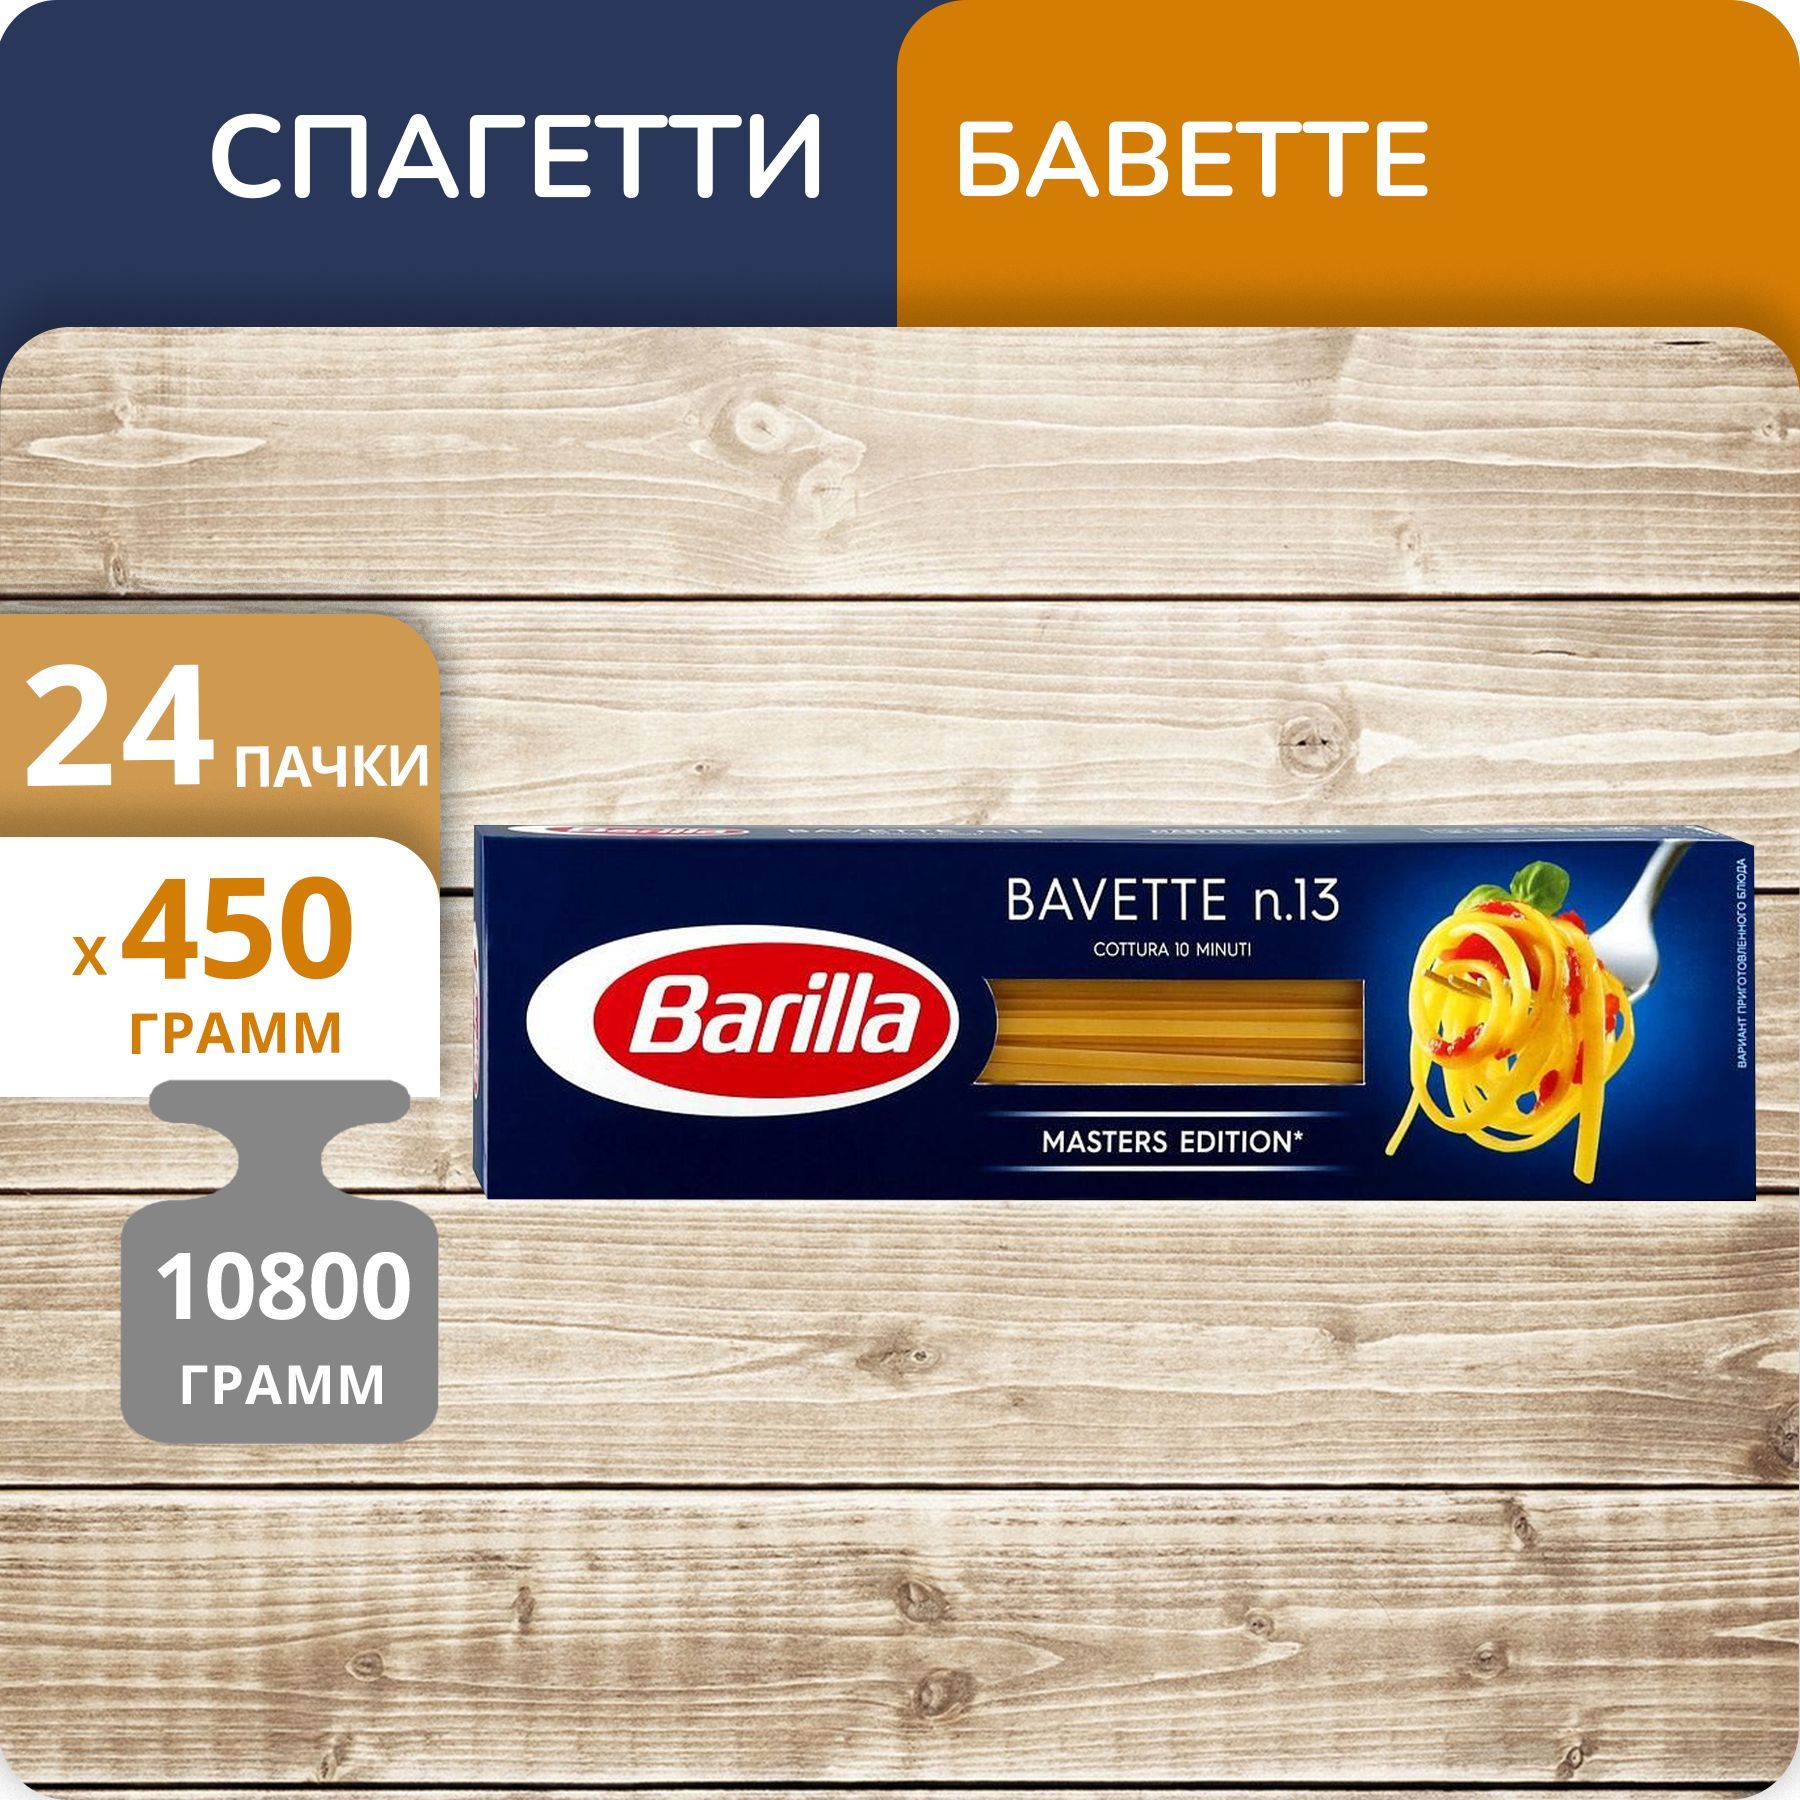 Спагетти Barilla №13 Баветте, 450 г х 24 шт